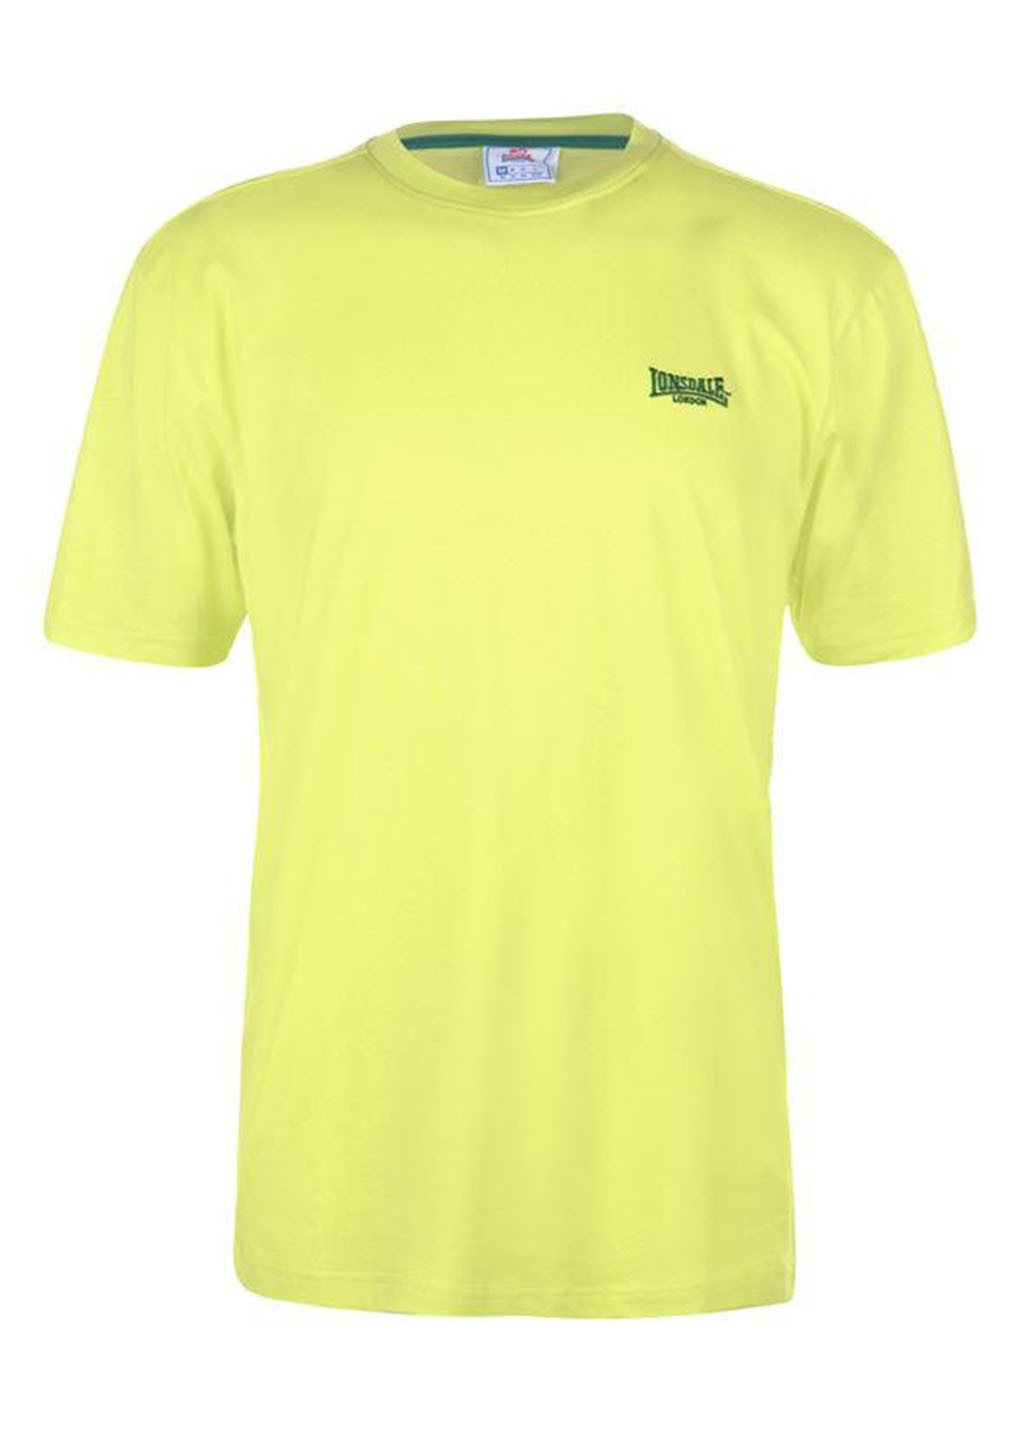 Кислотно-жёлтая футболка Lonsdale